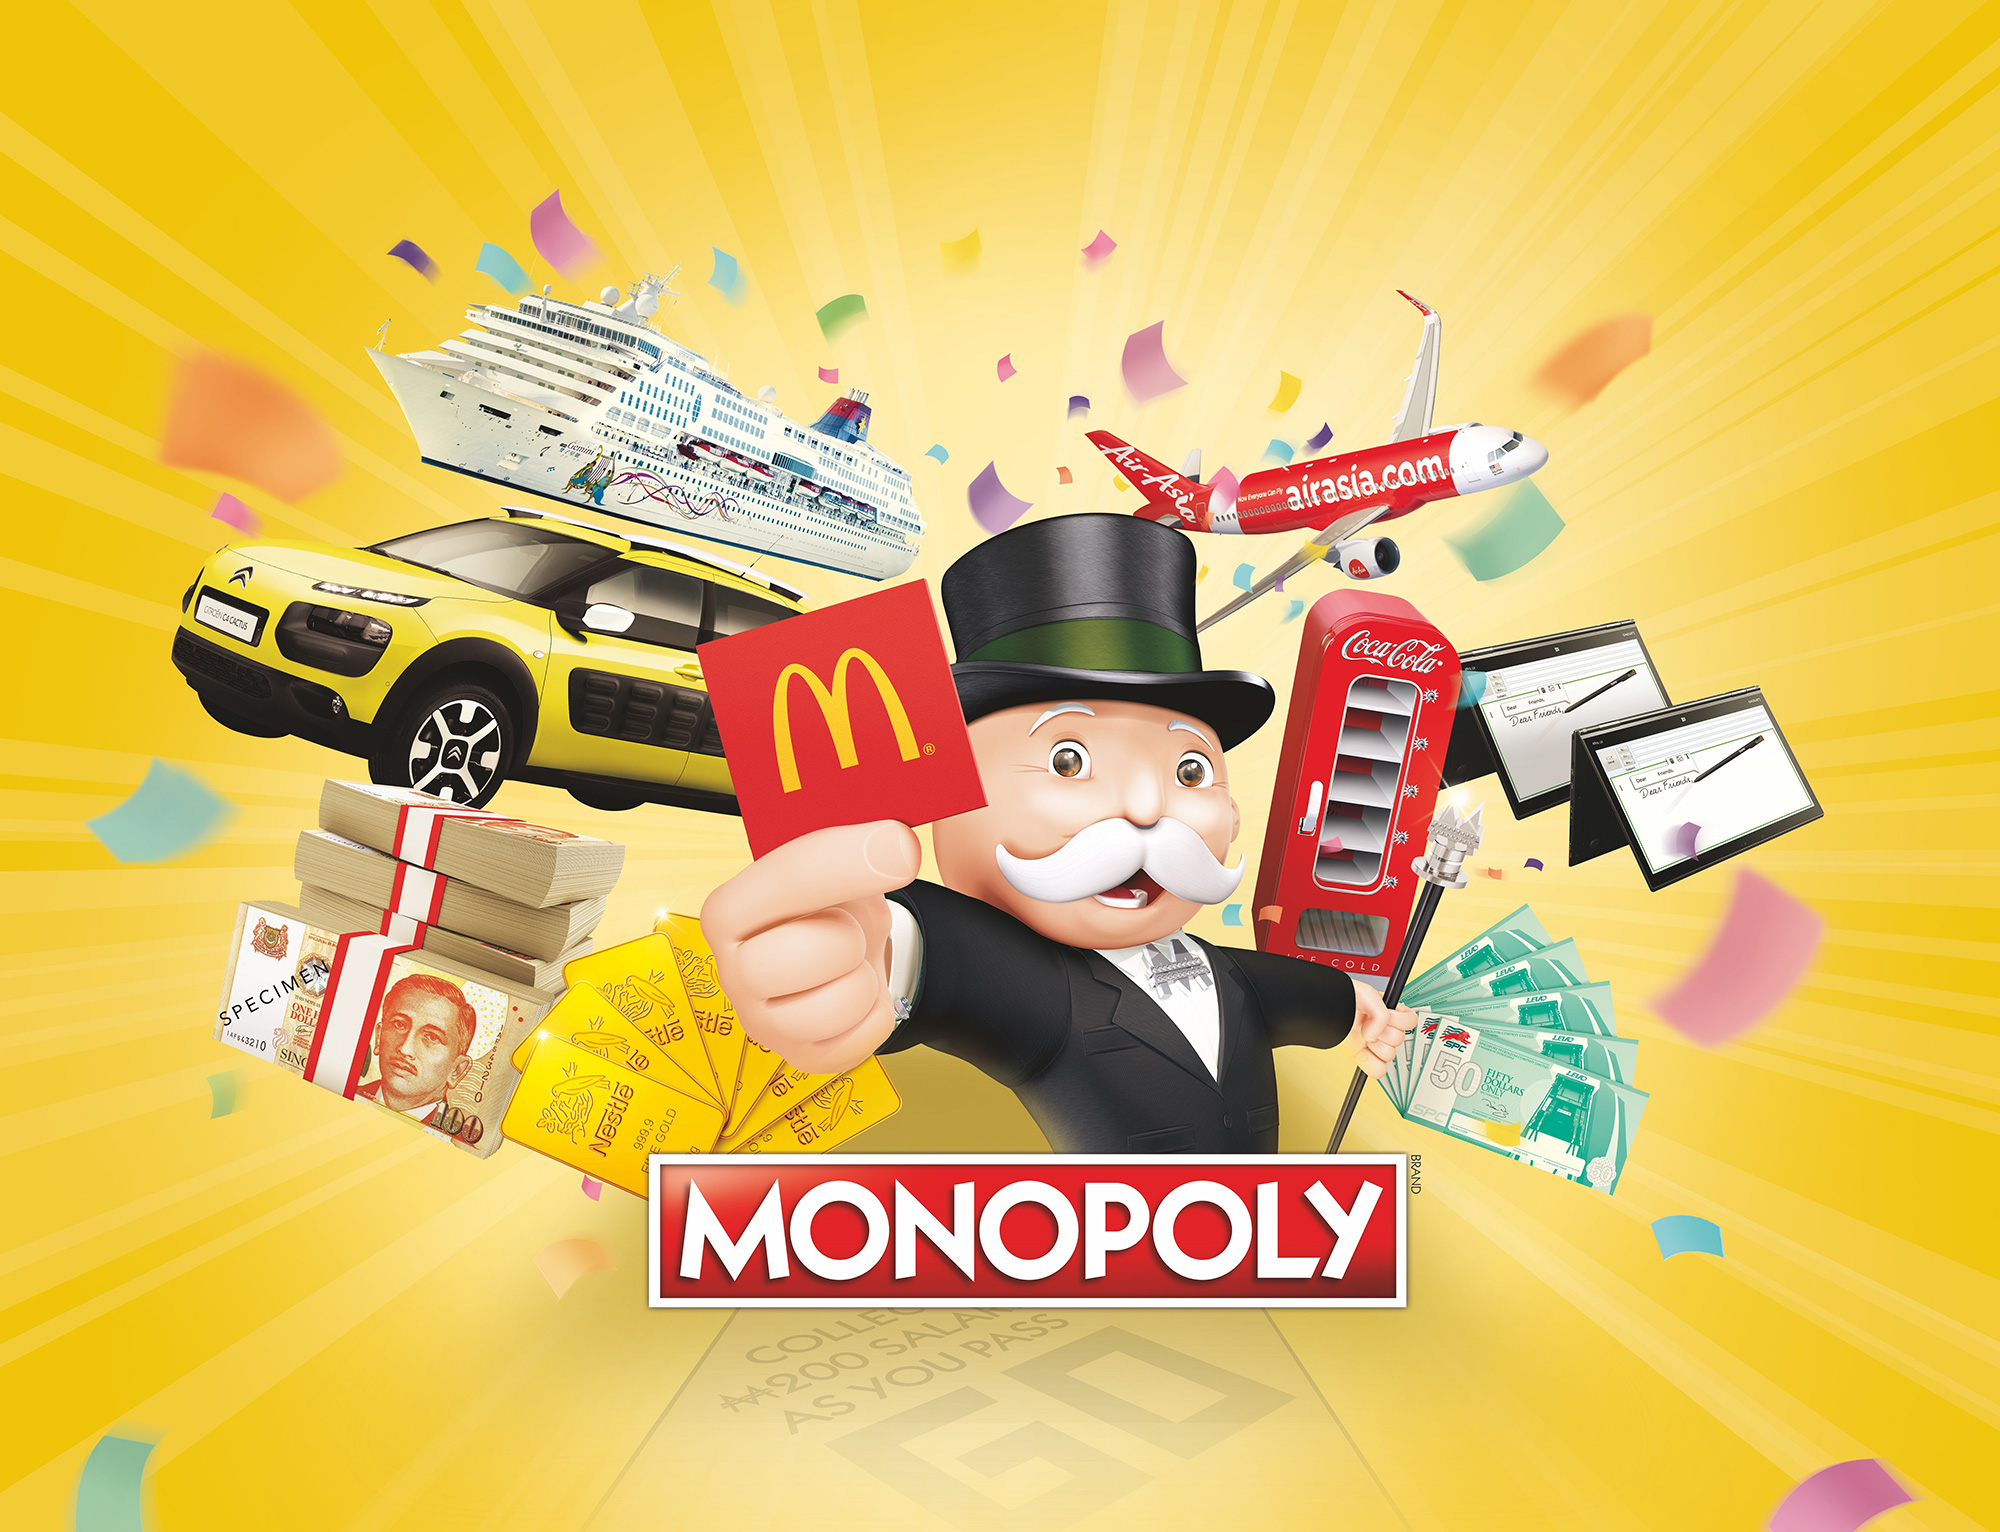 mcdonalds monopoly game board 2016